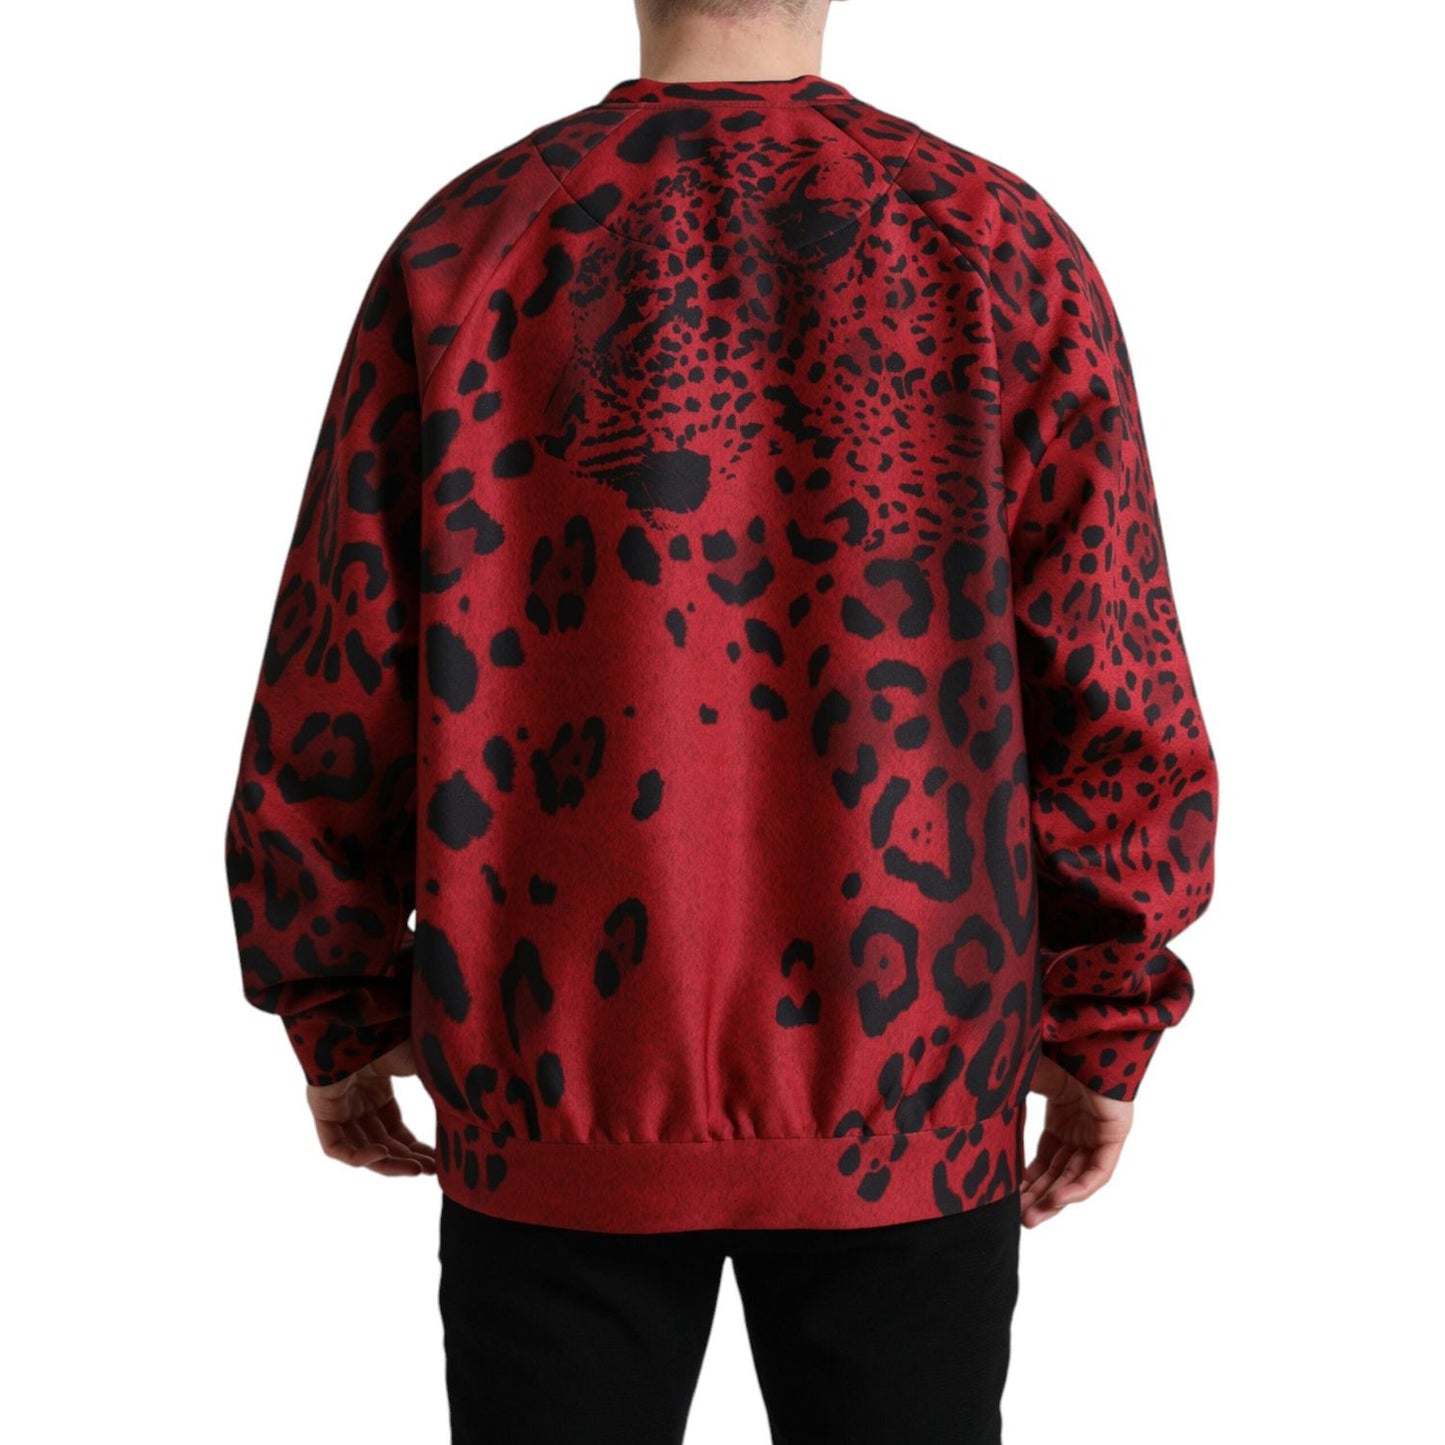 Dolce & Gabbana Elegant Leopard Print Pullover Sweater red-leopard-print-crewneck-pullover-sweater 465A1979-BG-scaled-97c4ec76-3aa.jpg